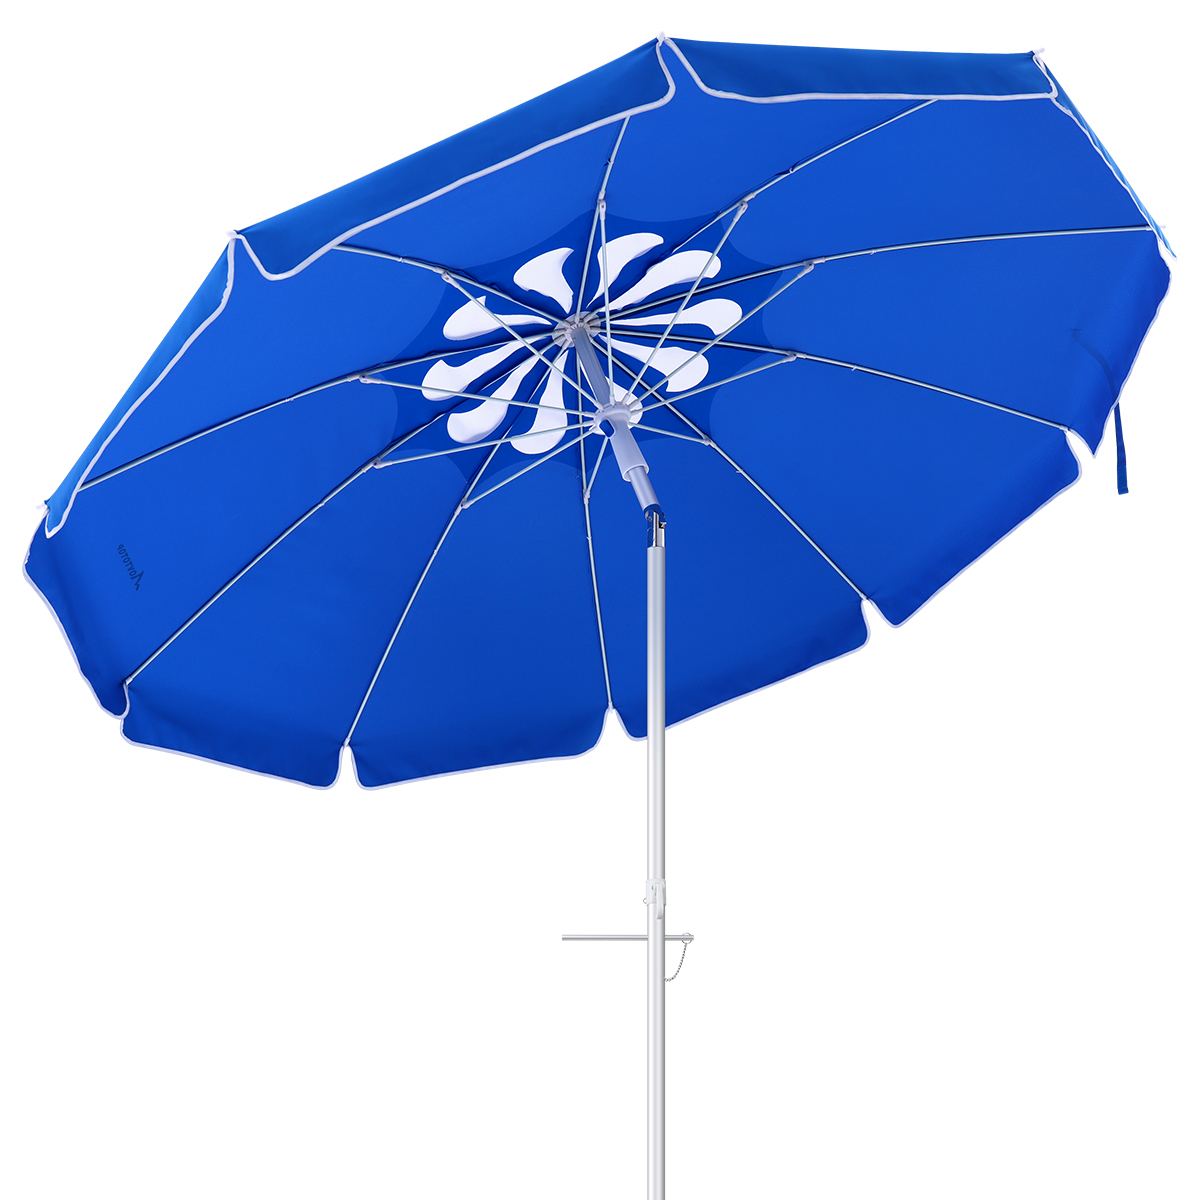 Petal Beach Umbrella 6.5ft Sun Shelter Ventilation UV Protection Seaside Umbrella for Outdoor Travel (Dark Blue Petal) - image 1 of 8